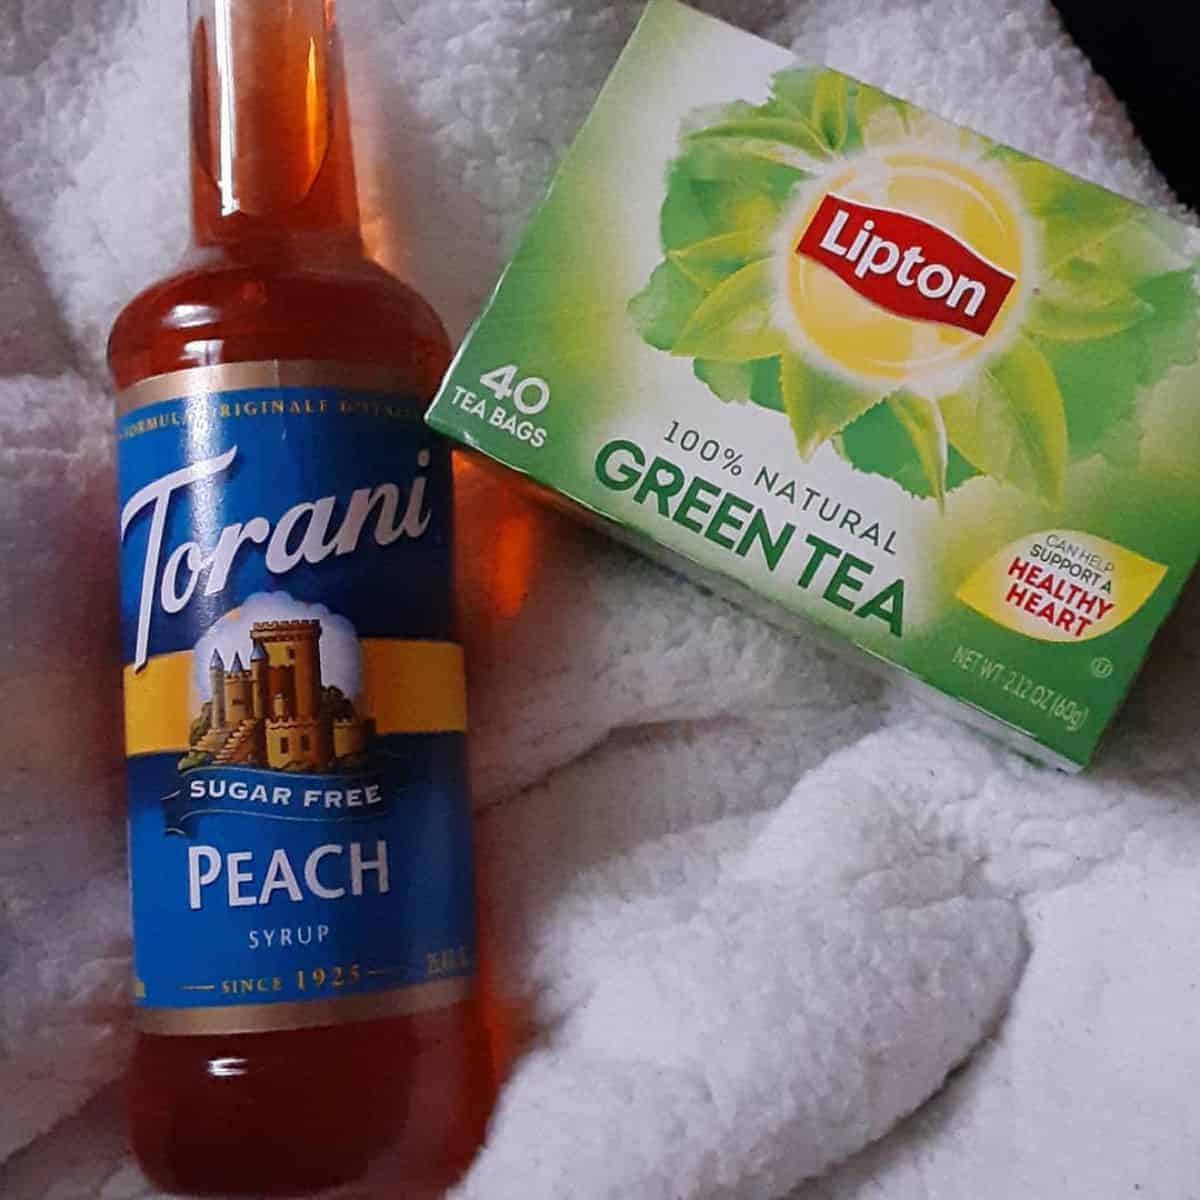 One bottle of Torani sweetener and a box of green tea